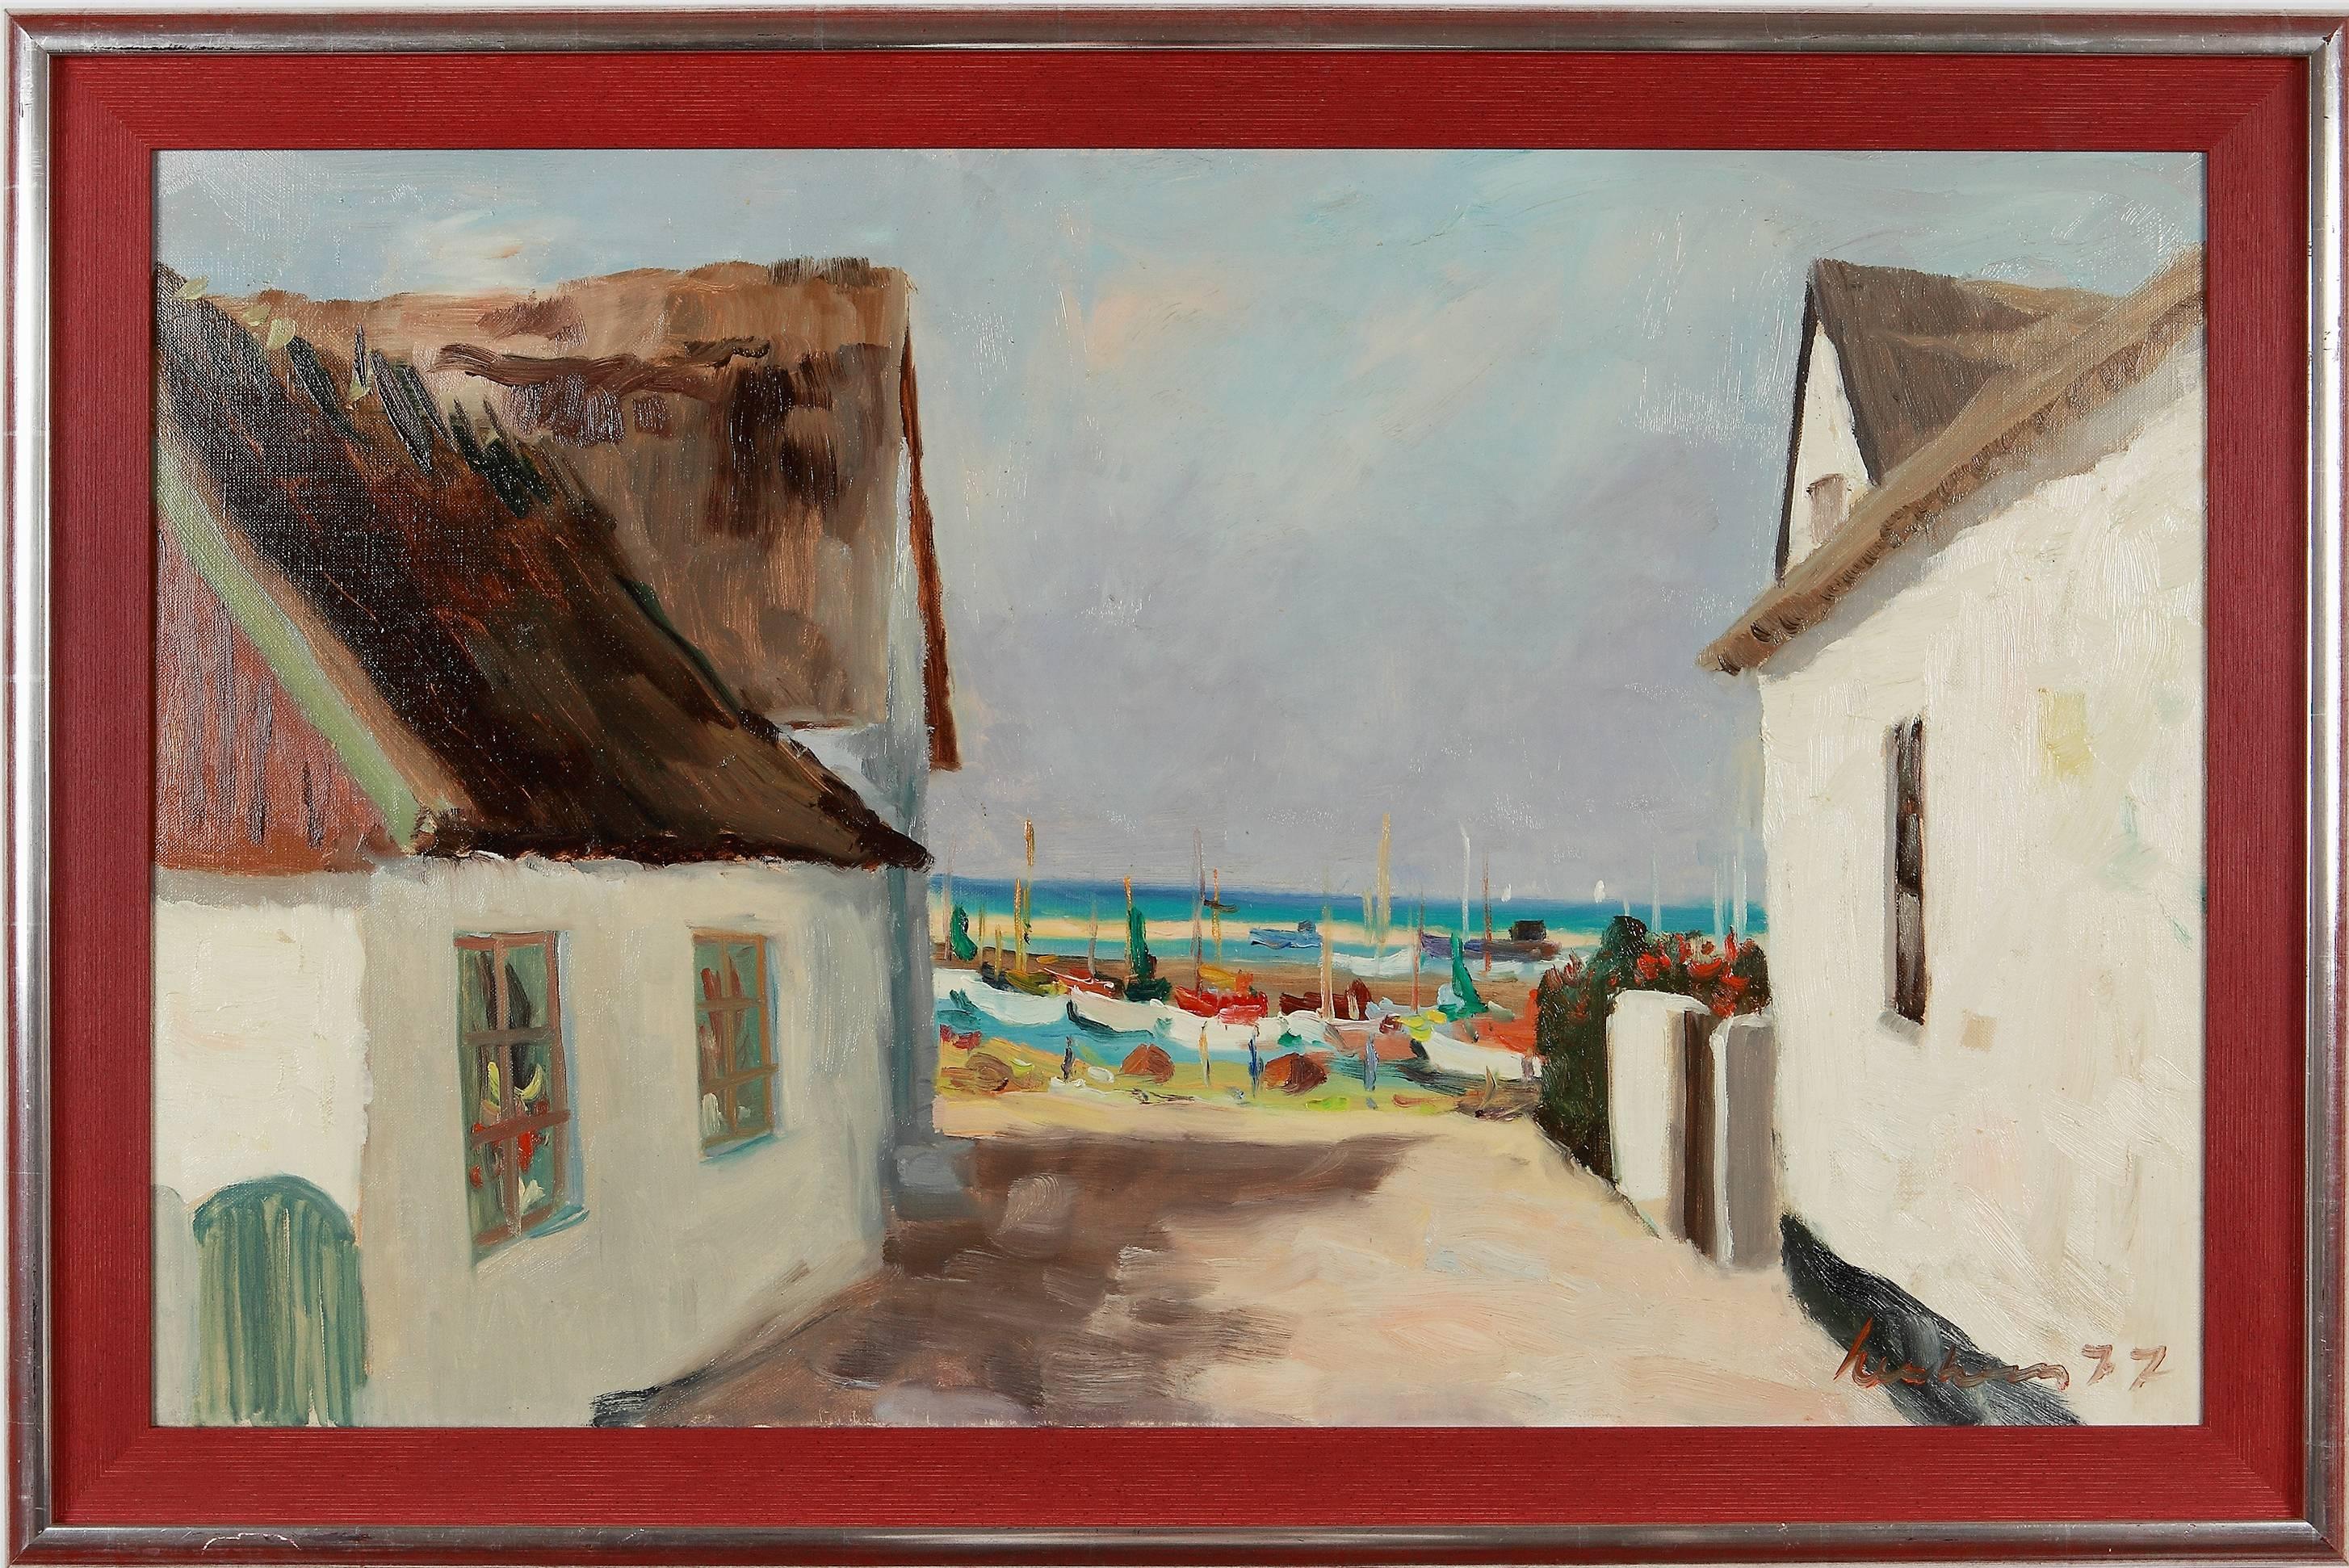 Clemens Neuhaus "Weg zum Strand" Oil Paint on Canvas 1977